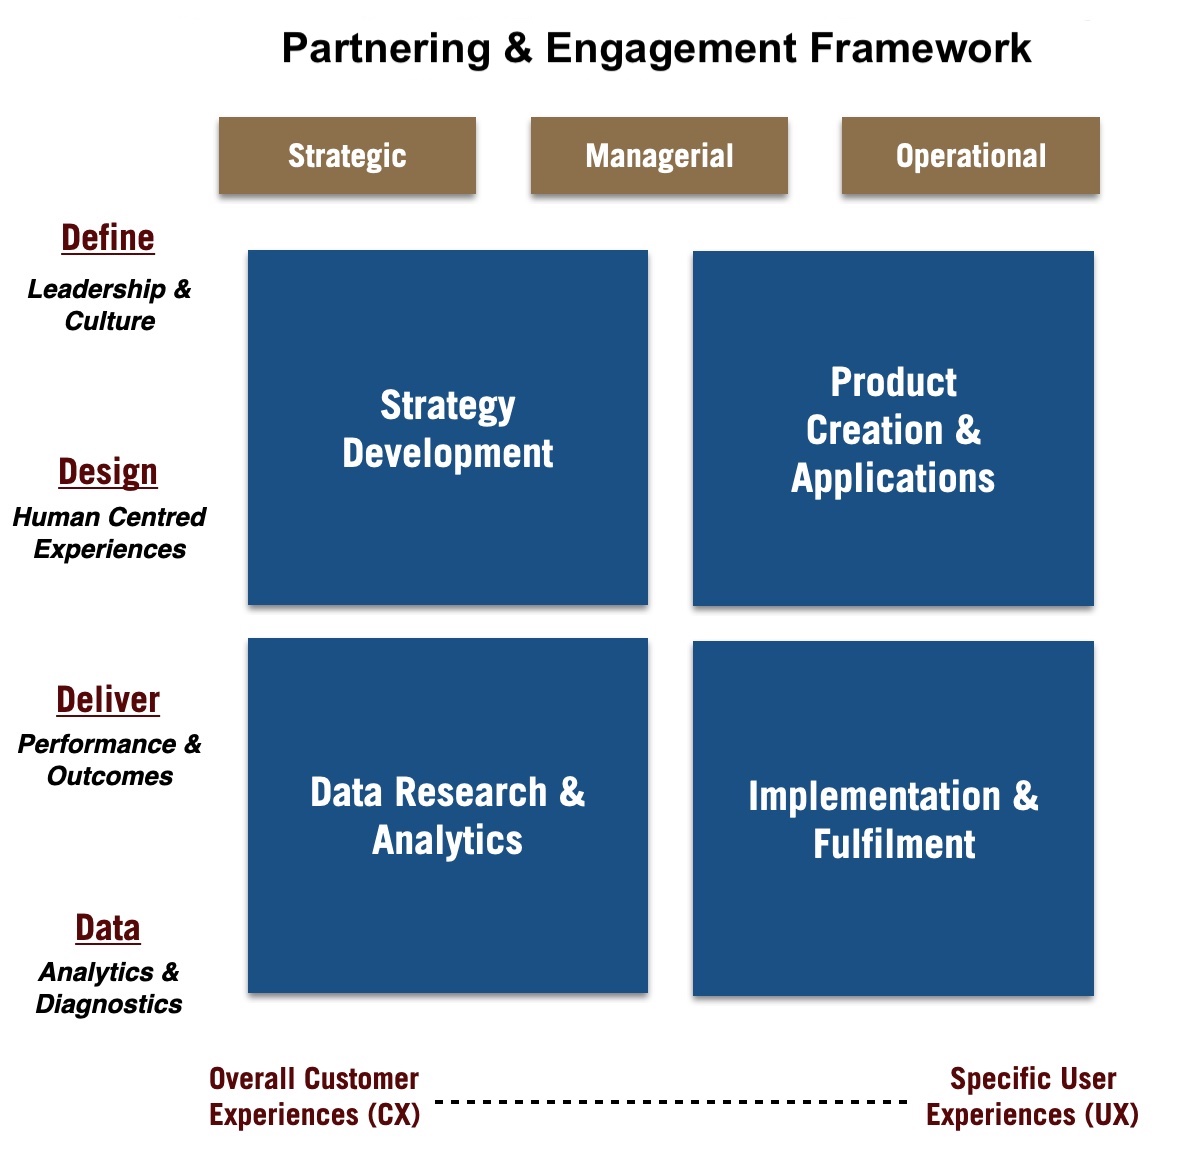 Partnering & Engagement Framework